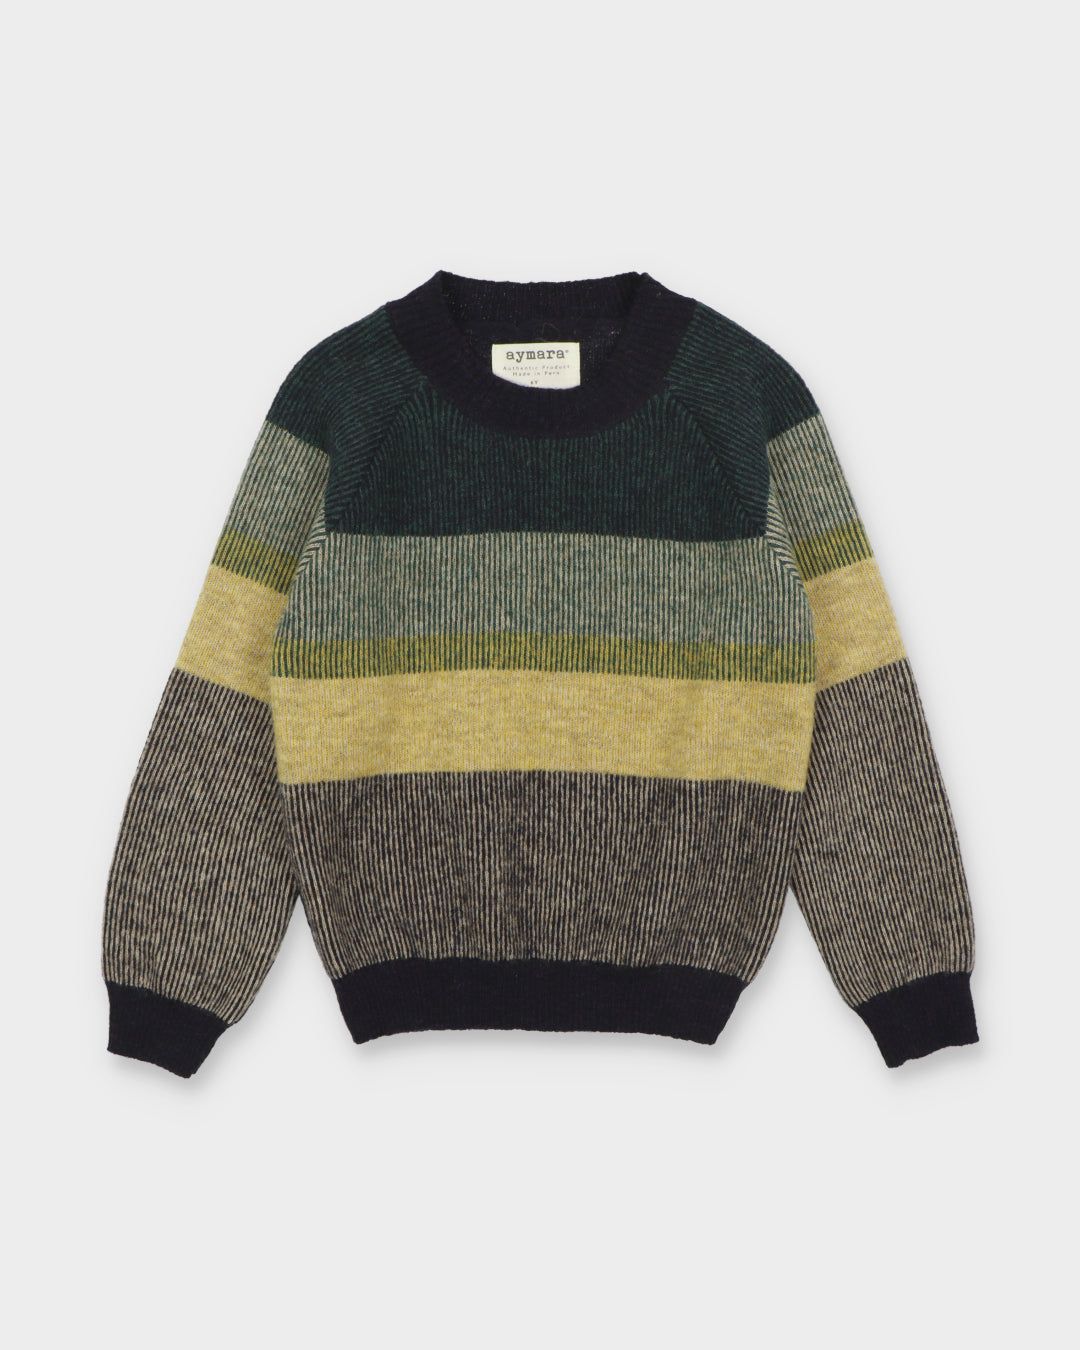 Aymara Gaston Jacquard Pullover Sweater